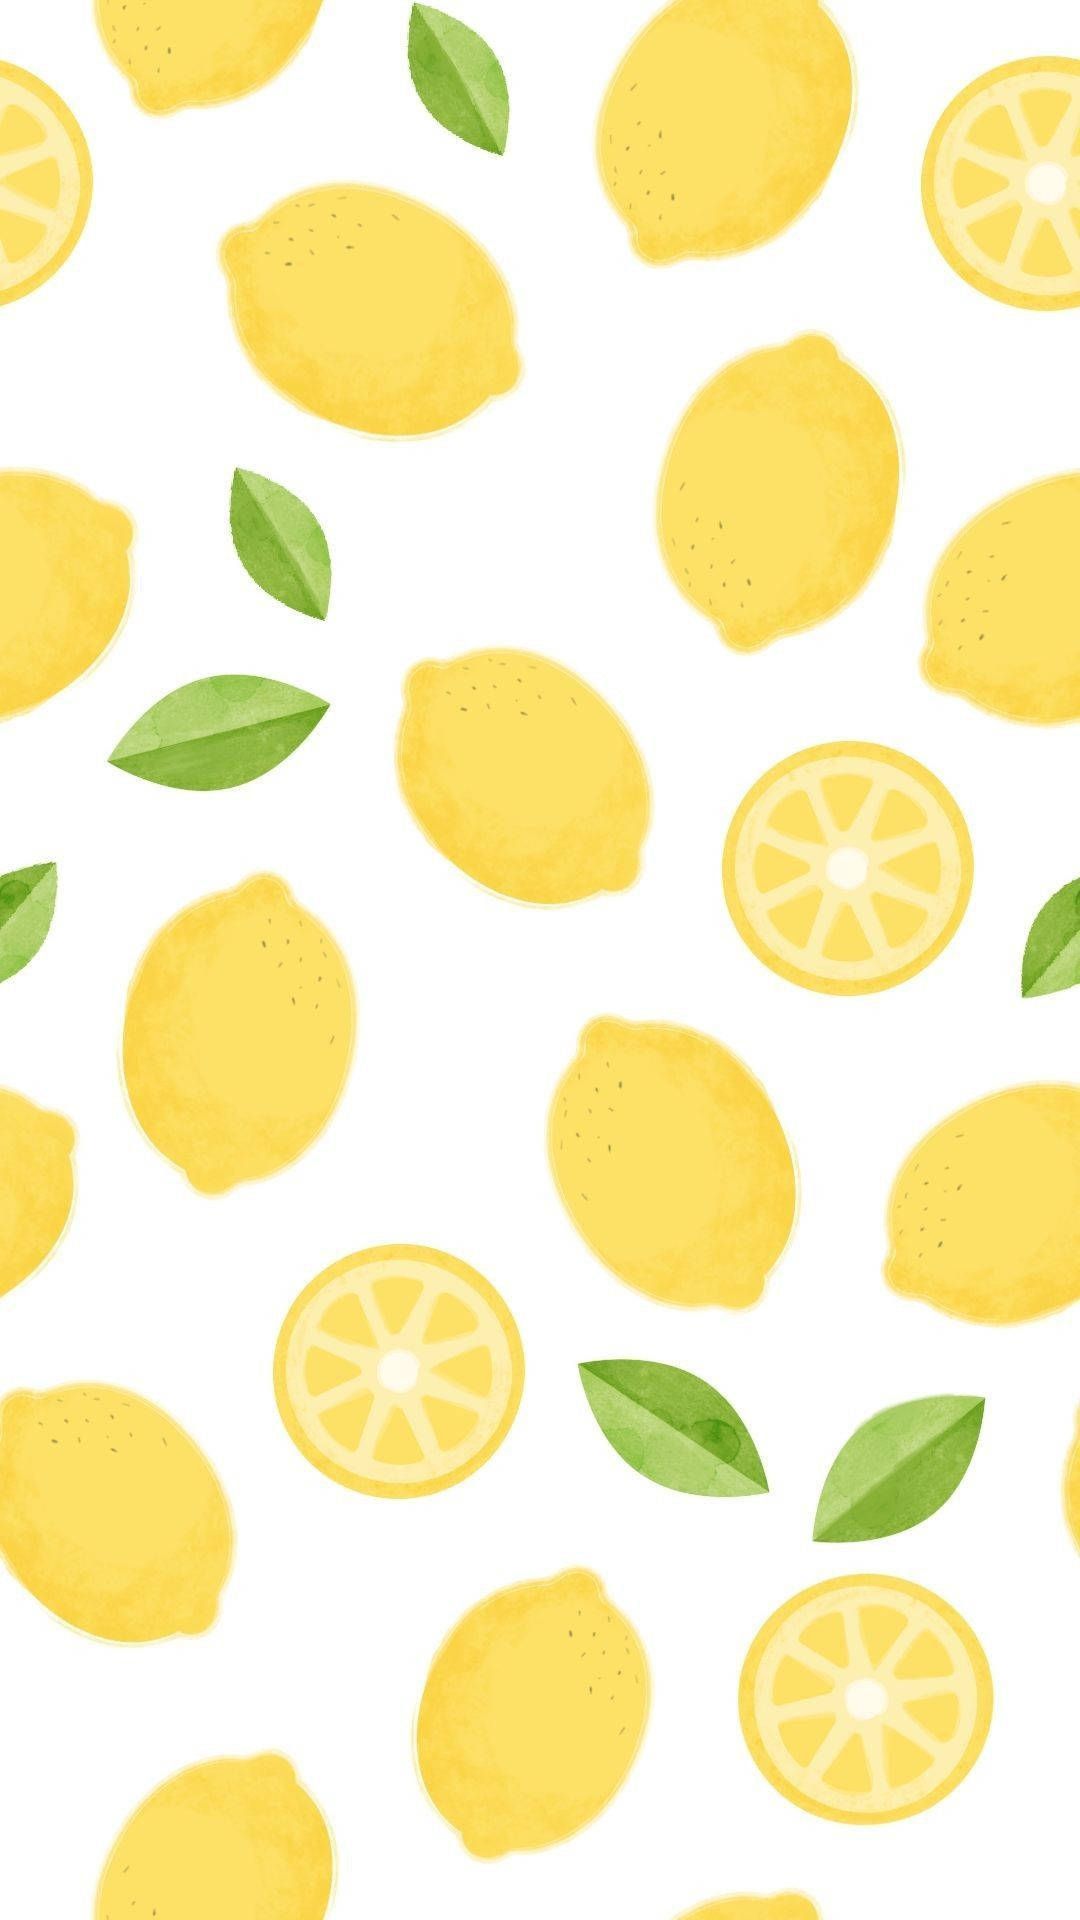 Free Lemon Wallpaper Downloads, Lemon Wallpaper for FREE